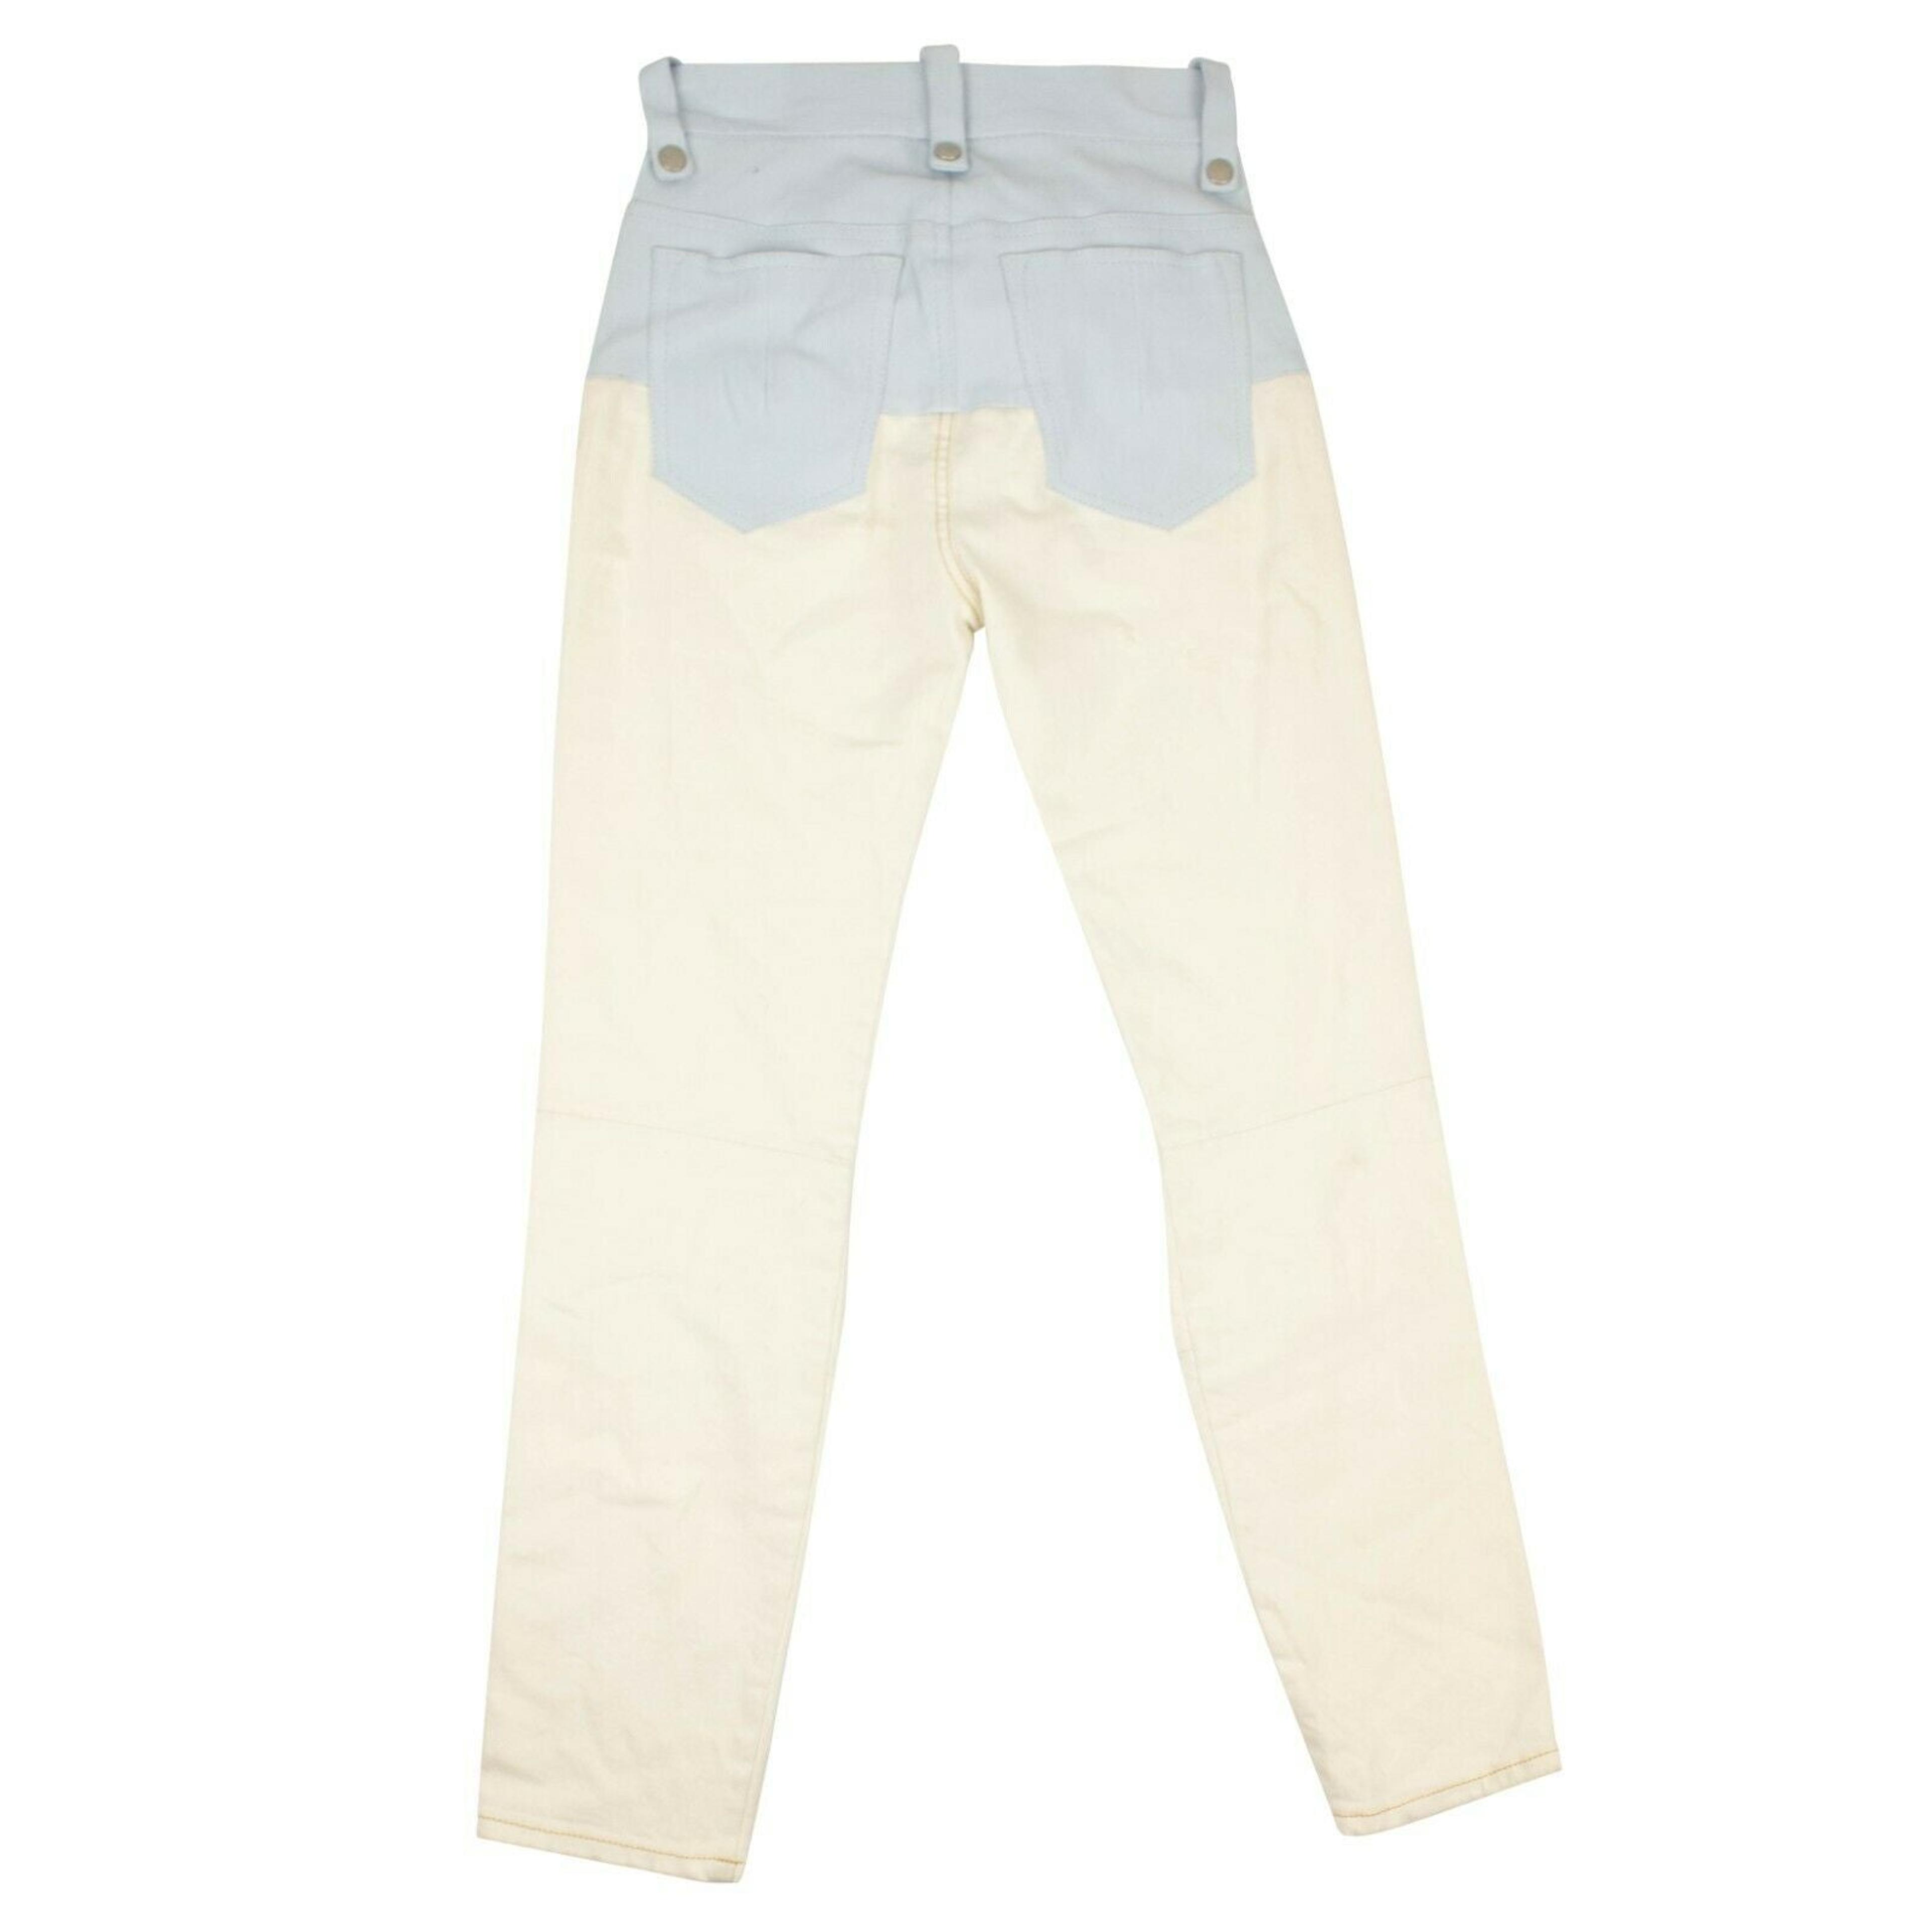 Alternate View 1 of White Denim Corset Jeans